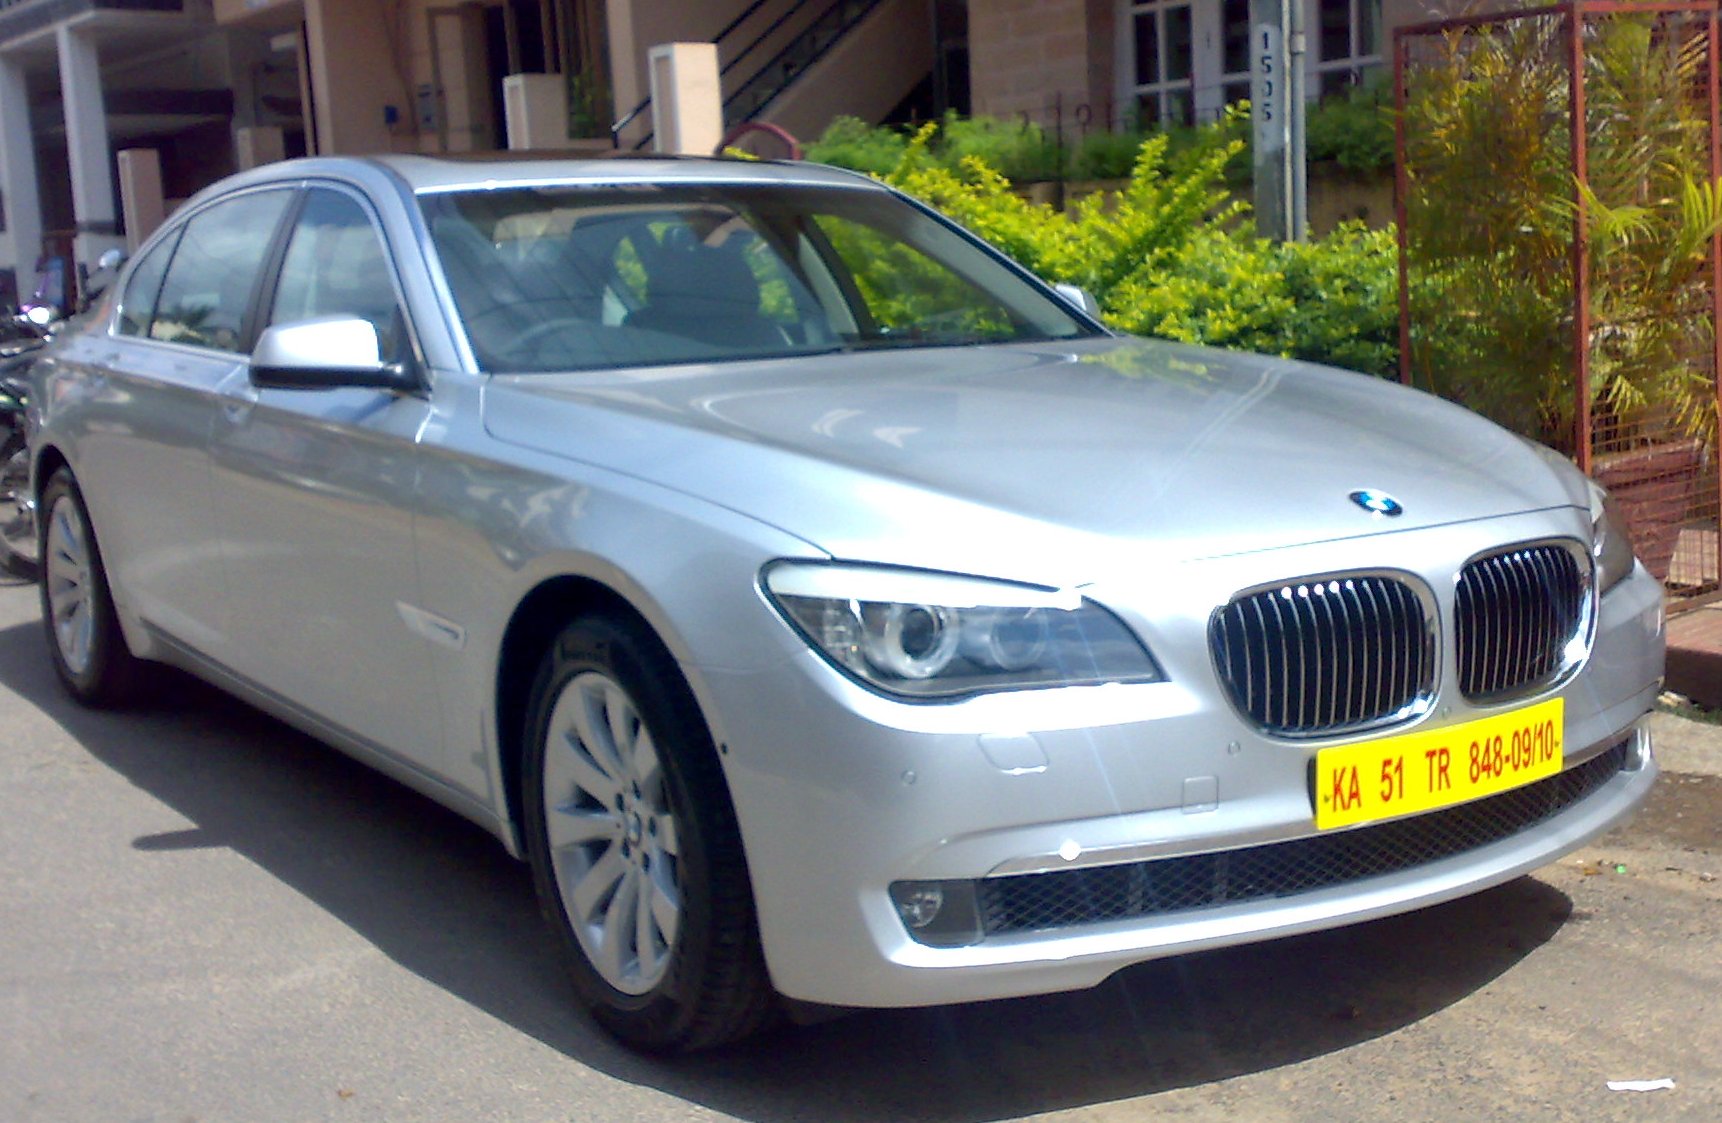 Premium car rental in bangalore || 9019944459